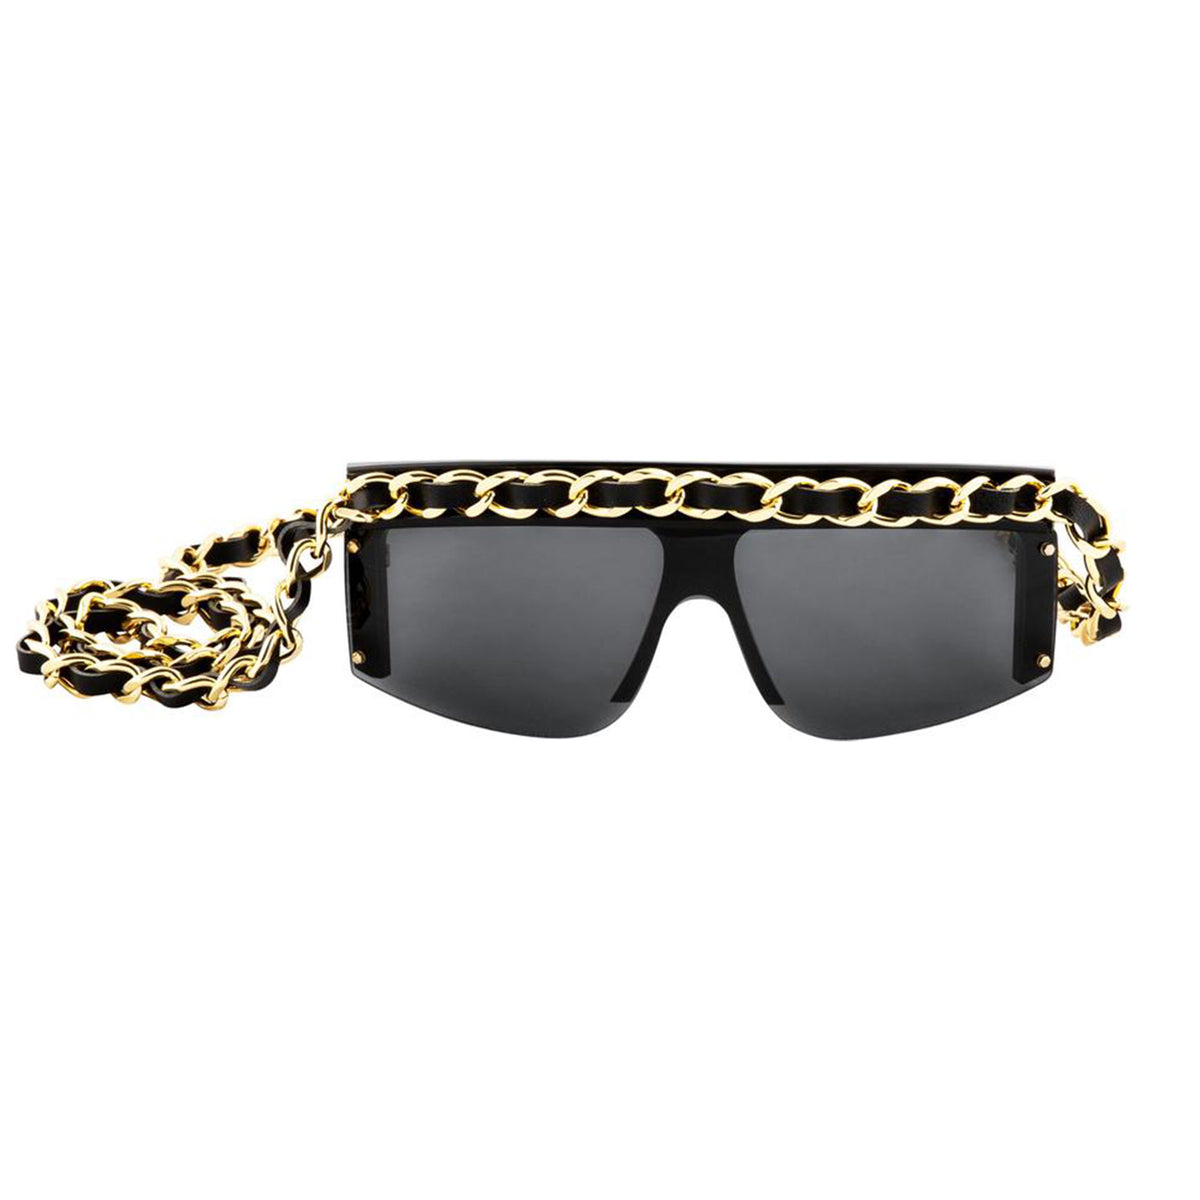 Vintage 90's CHANEL Paris Gold Metal Chain Black Sunglasses Shades, Moonstone Vintage